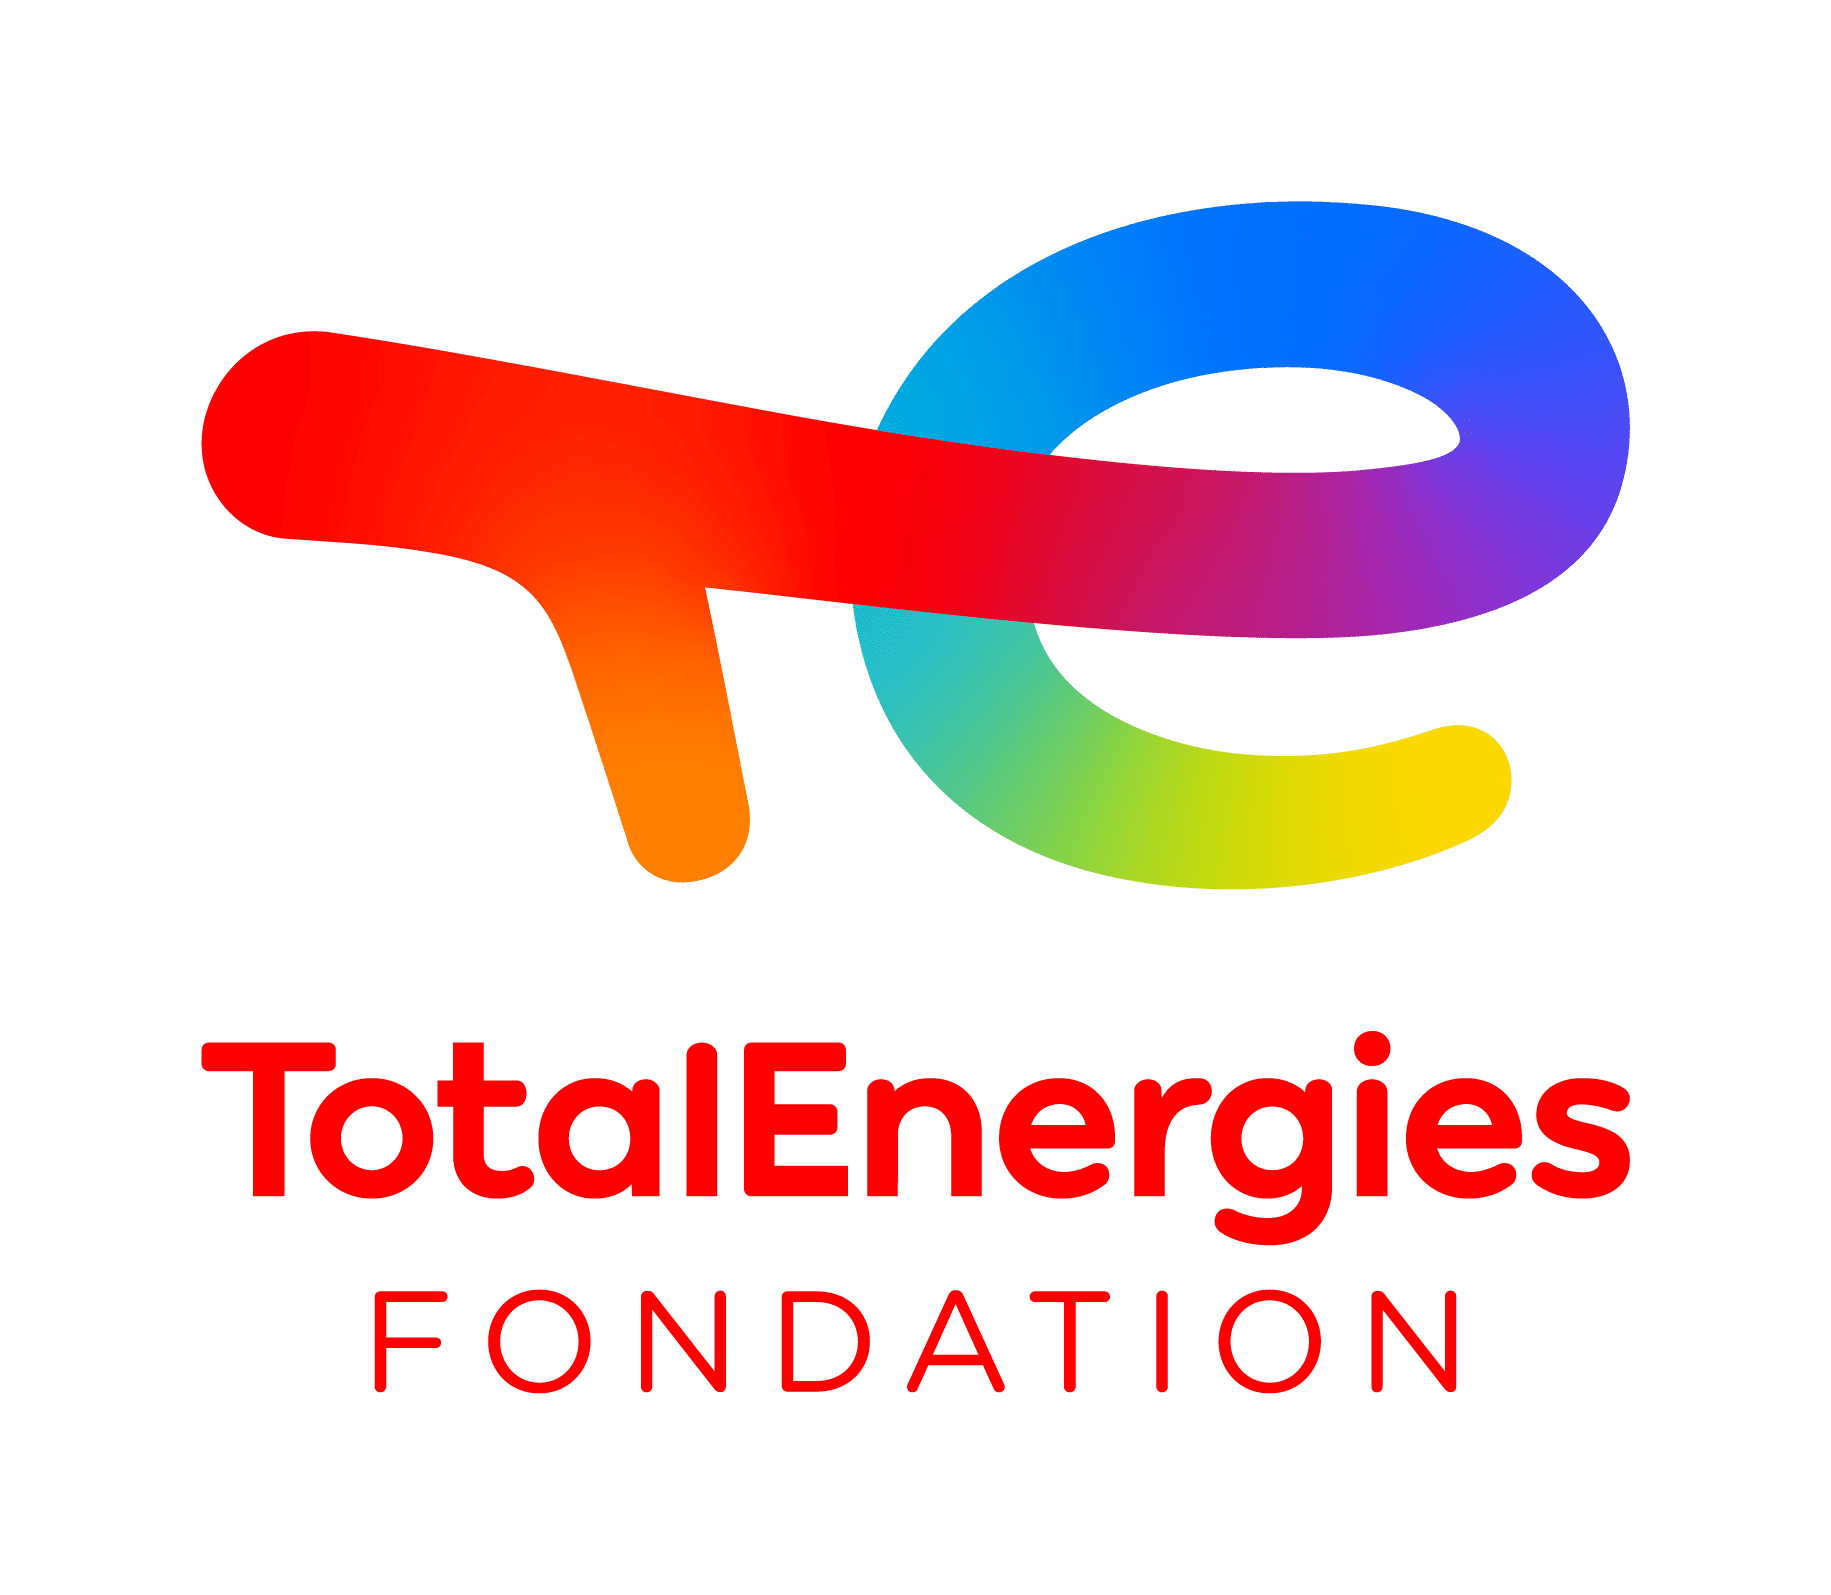 logo total energies fondation